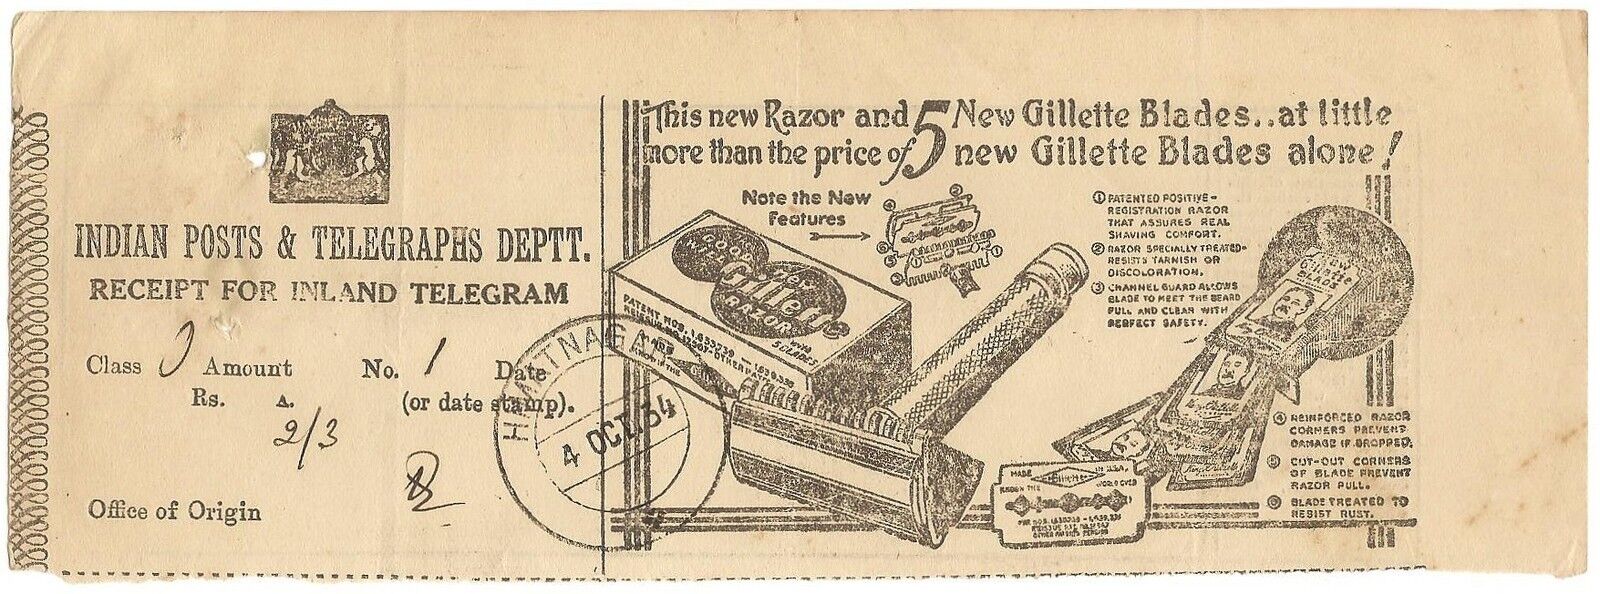 advertising Gillette Razors, October 1934 - front